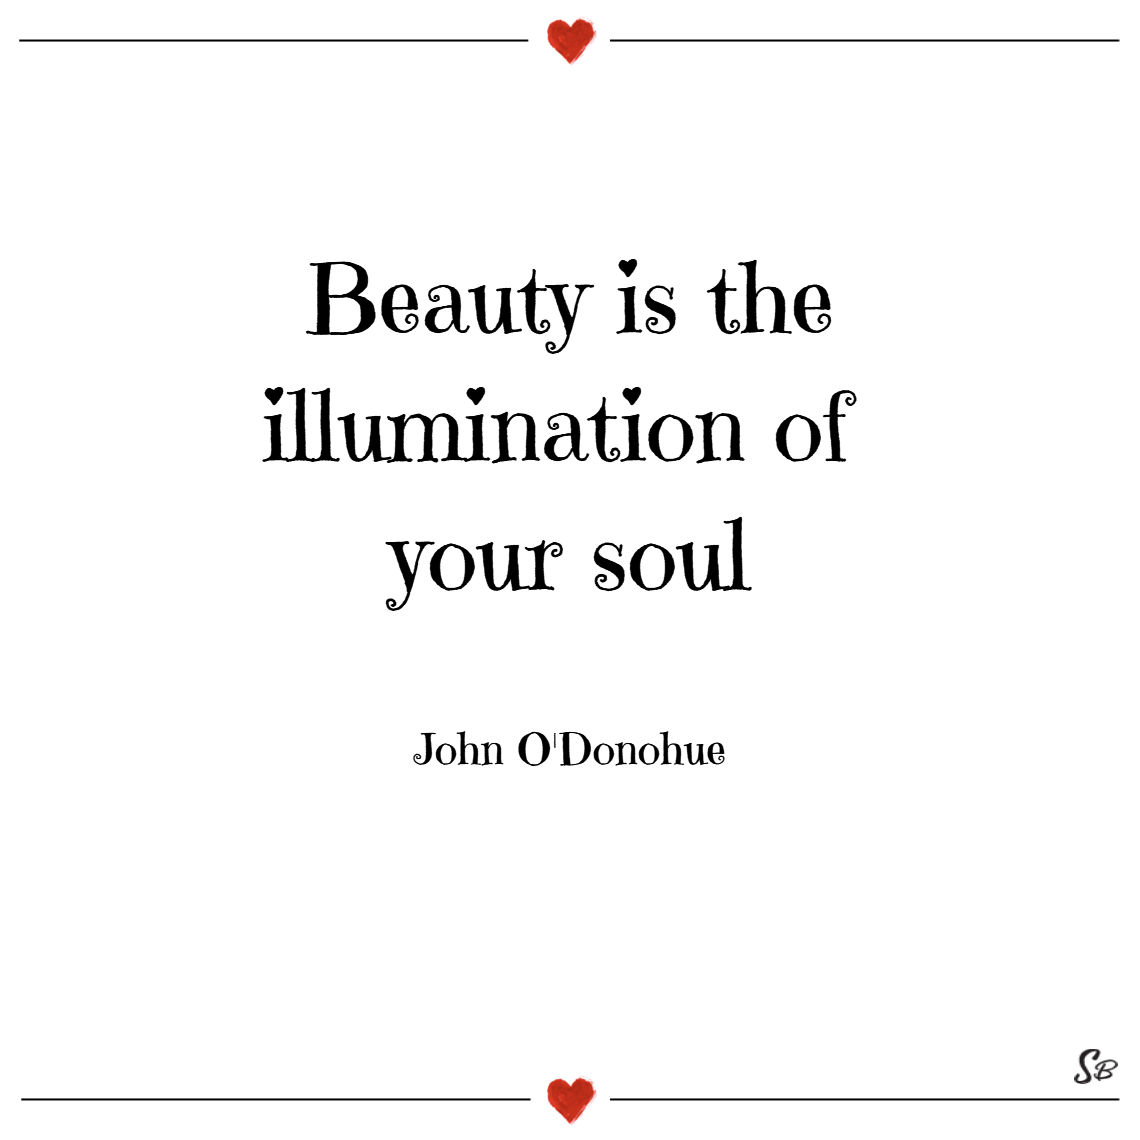 Beauty is the illumination of your soul. John o’donohue